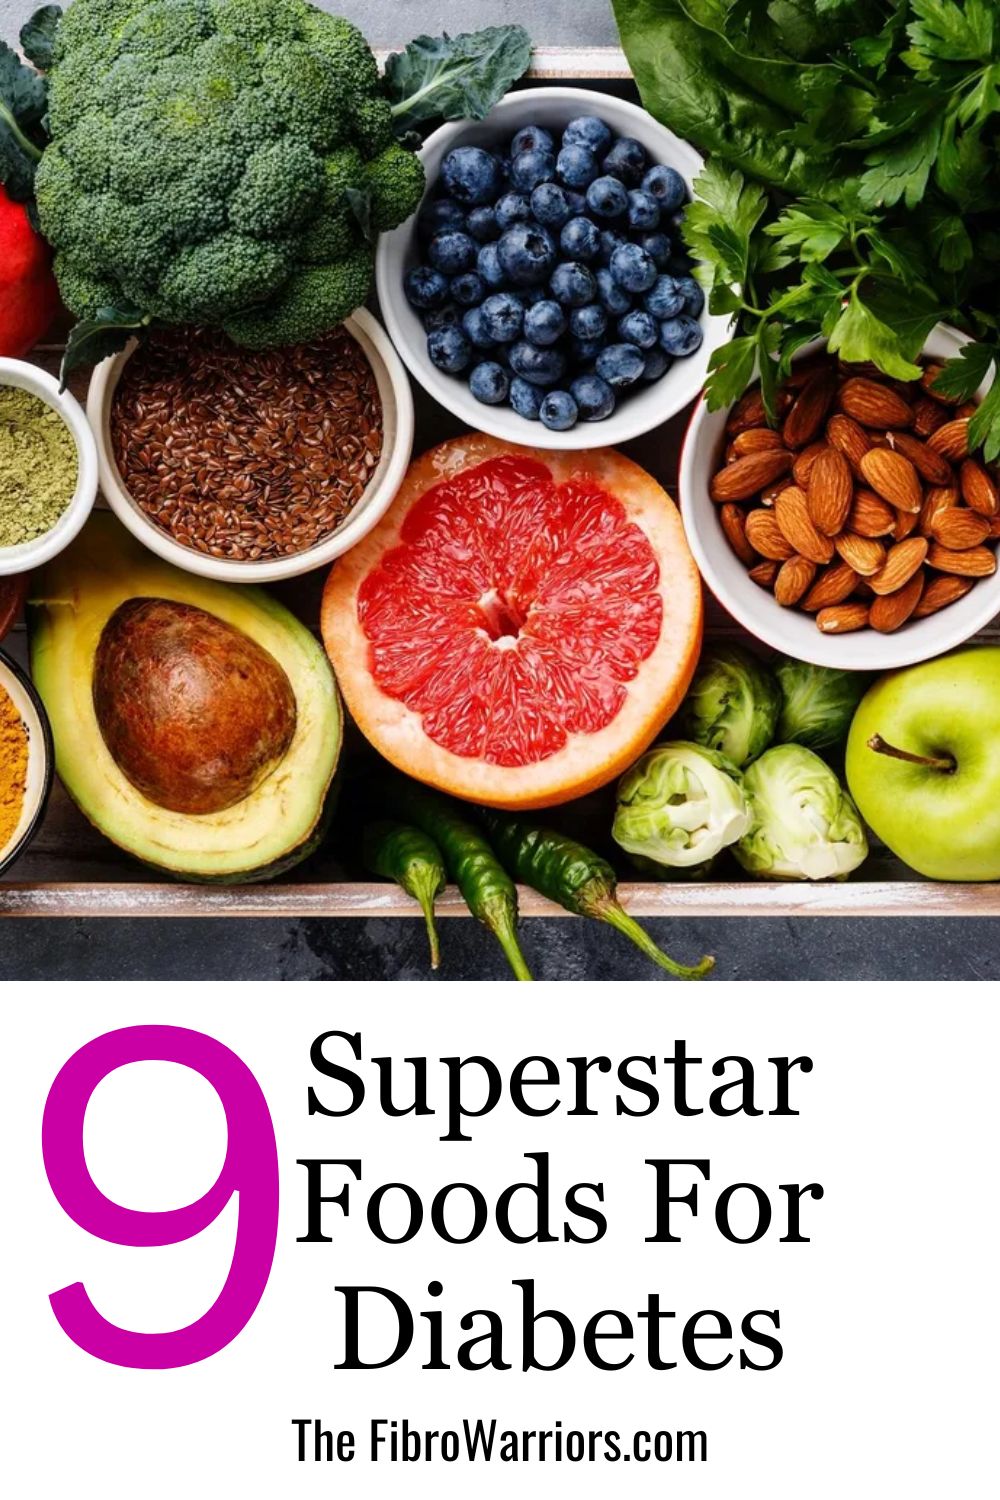 9 Superstar Foods for Diabetes